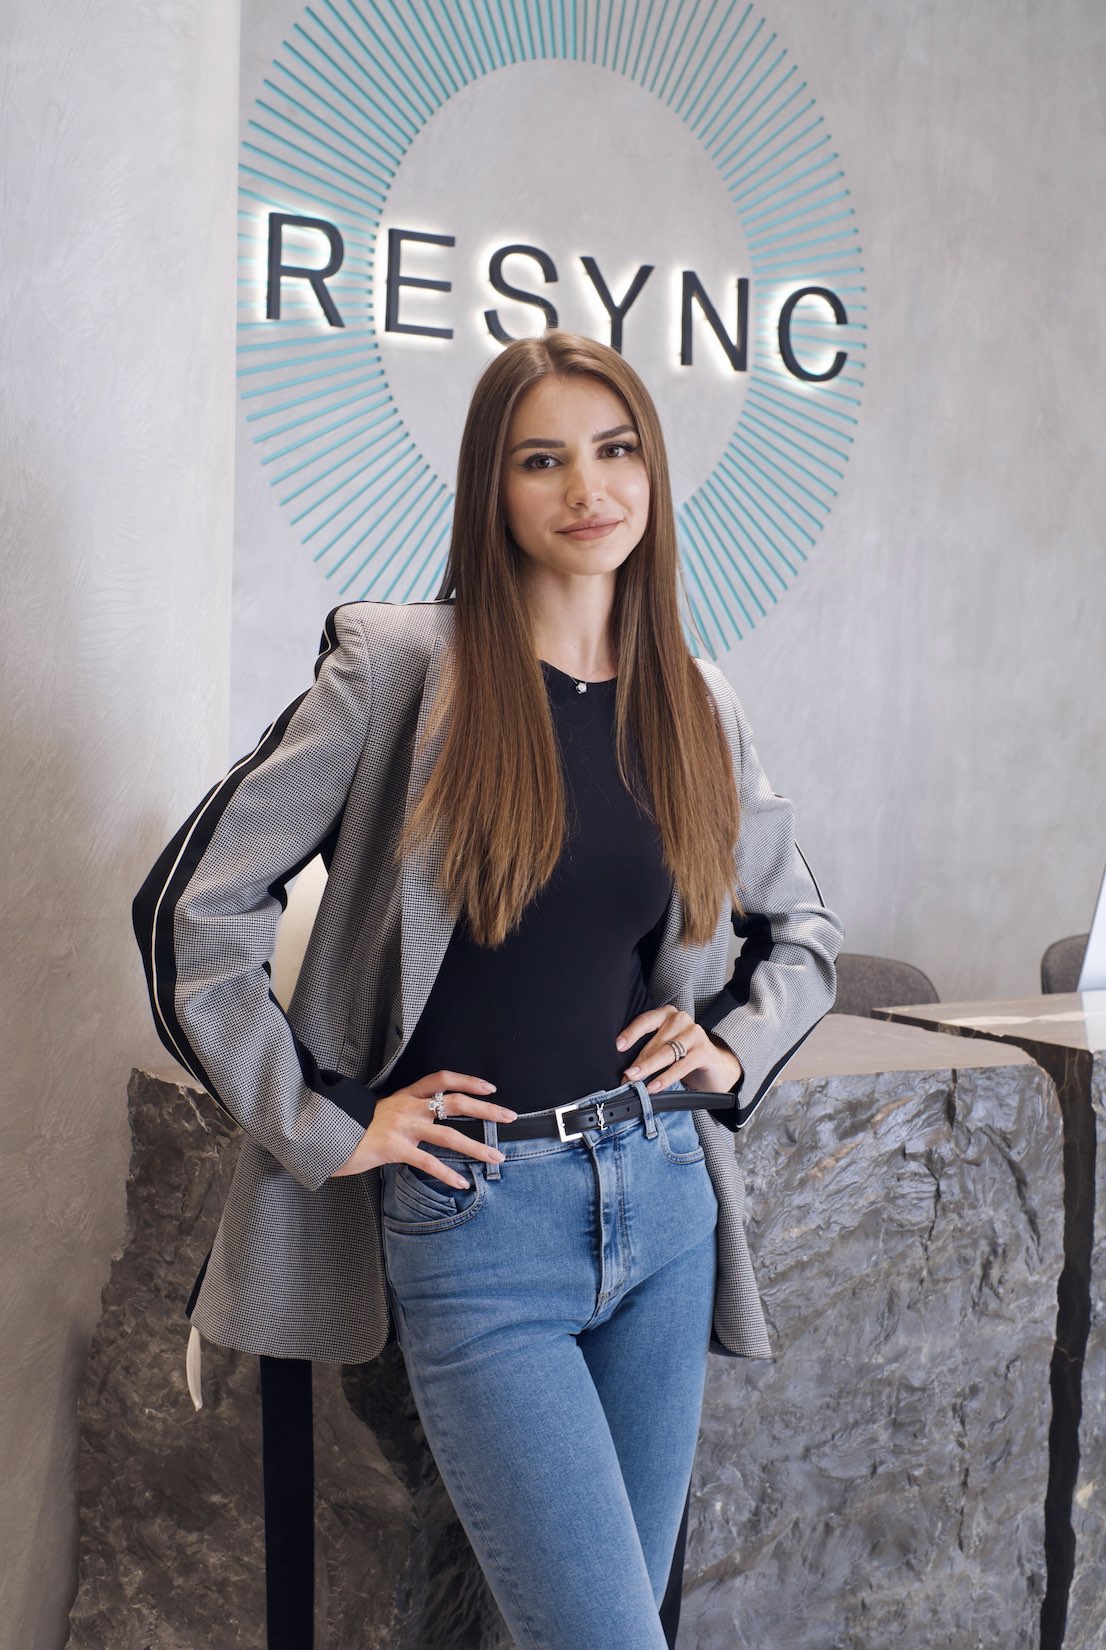 Jenya melay, founder and ceo of resync